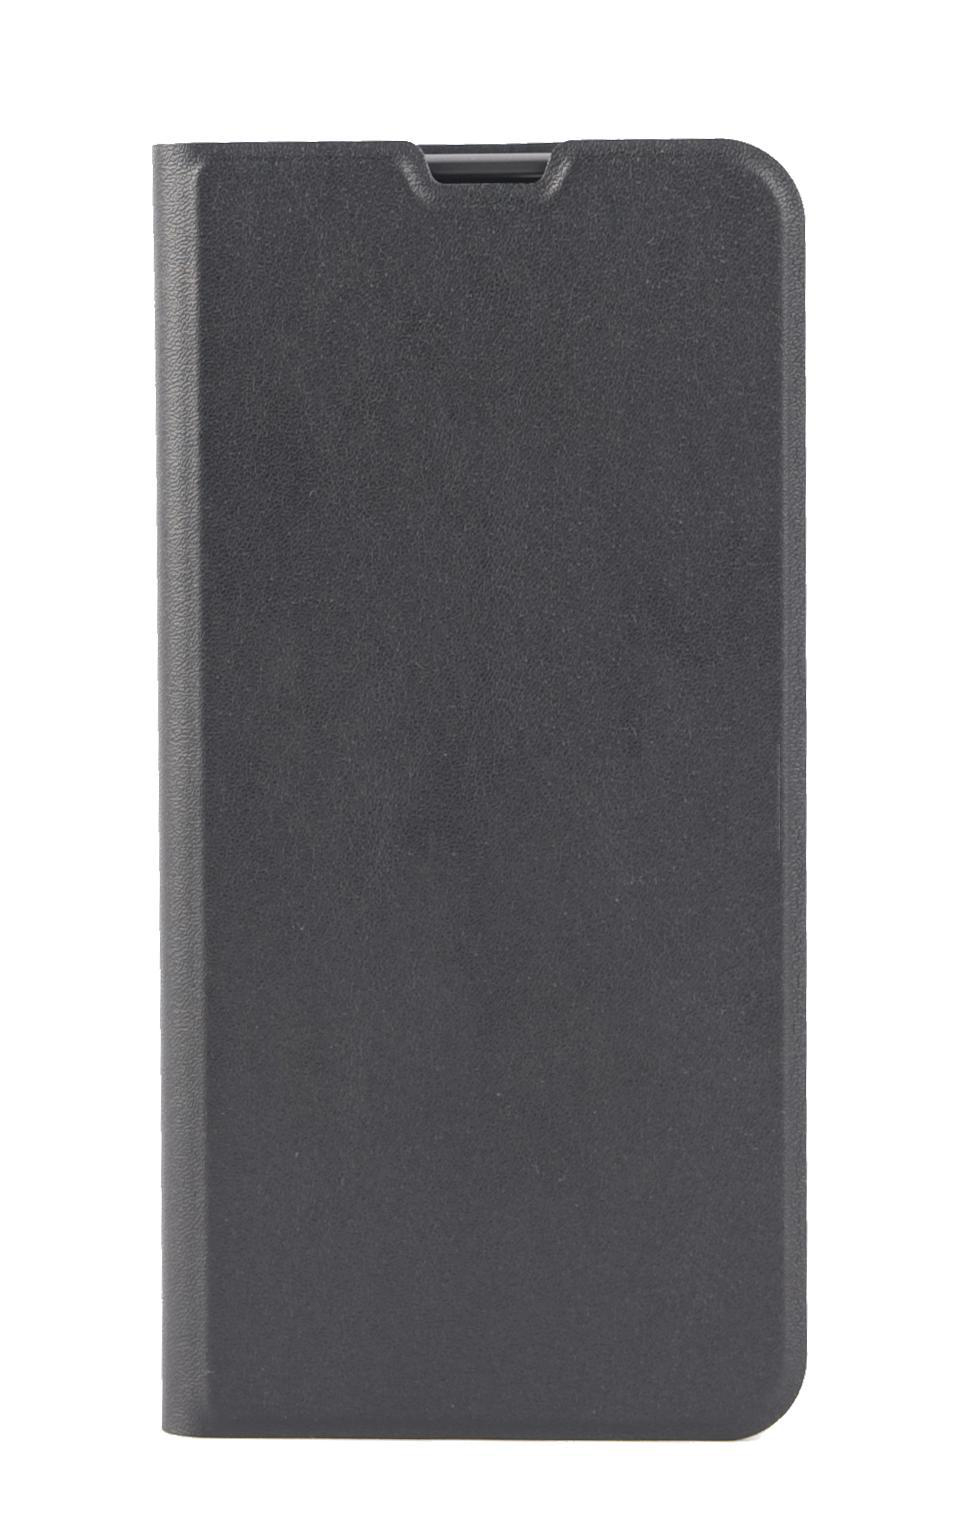 Galaxy A33 Bookcover, ISY 5G, ISC-5211, Schwarz Samsung,